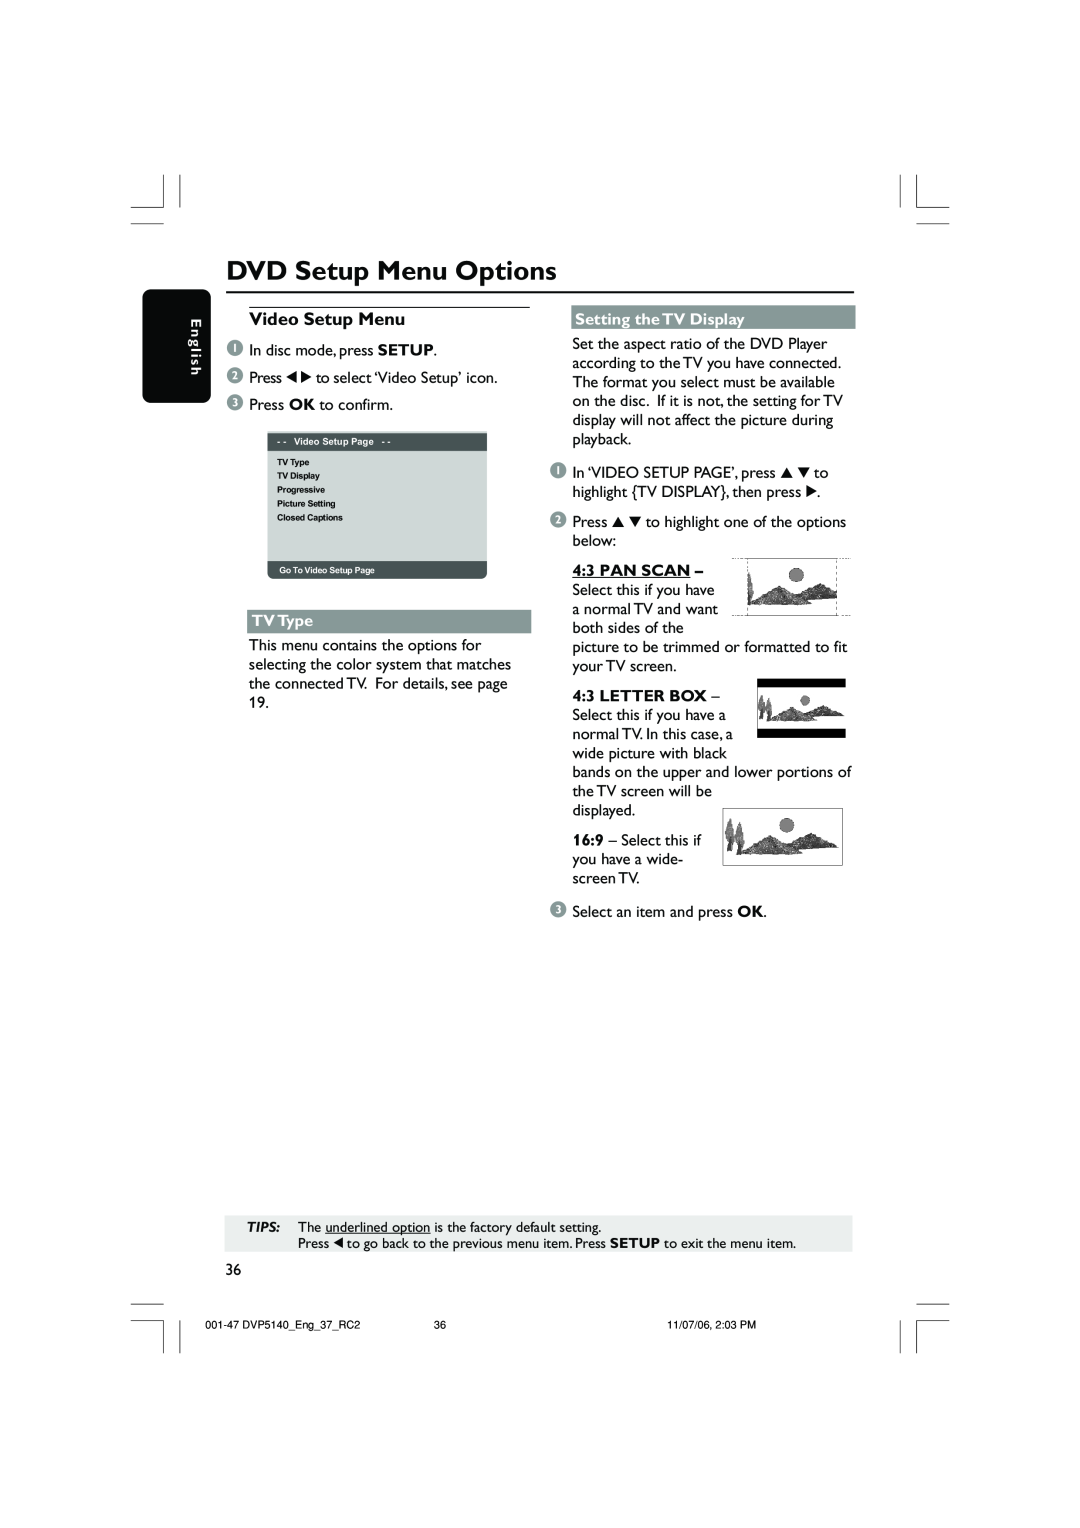 Philips DVP5140 user manual Video Setup Menu, DVD Setup Menu Options, TV Type, Setting the TV Display 